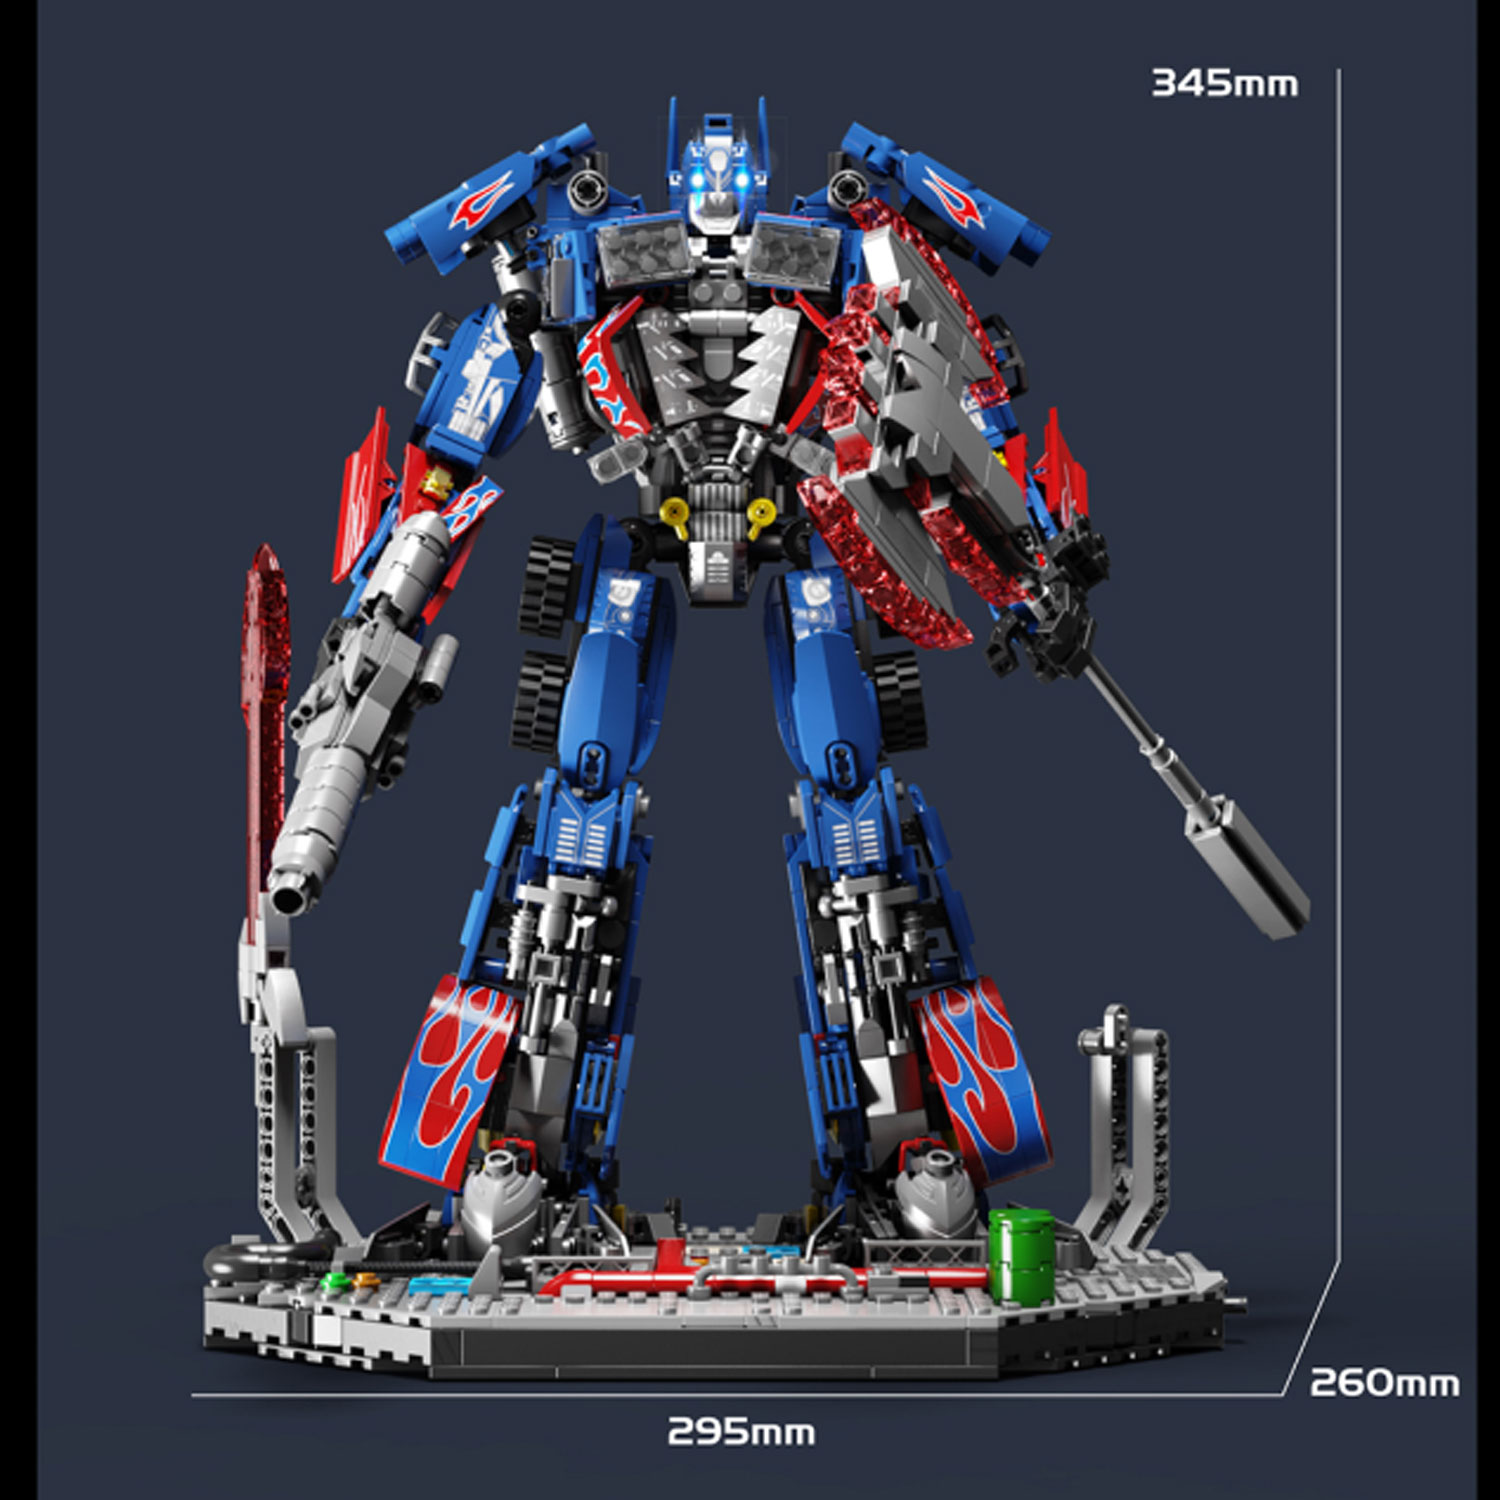 Tuole 6006 Transformers Optimus Prime 1 - WANGE Block